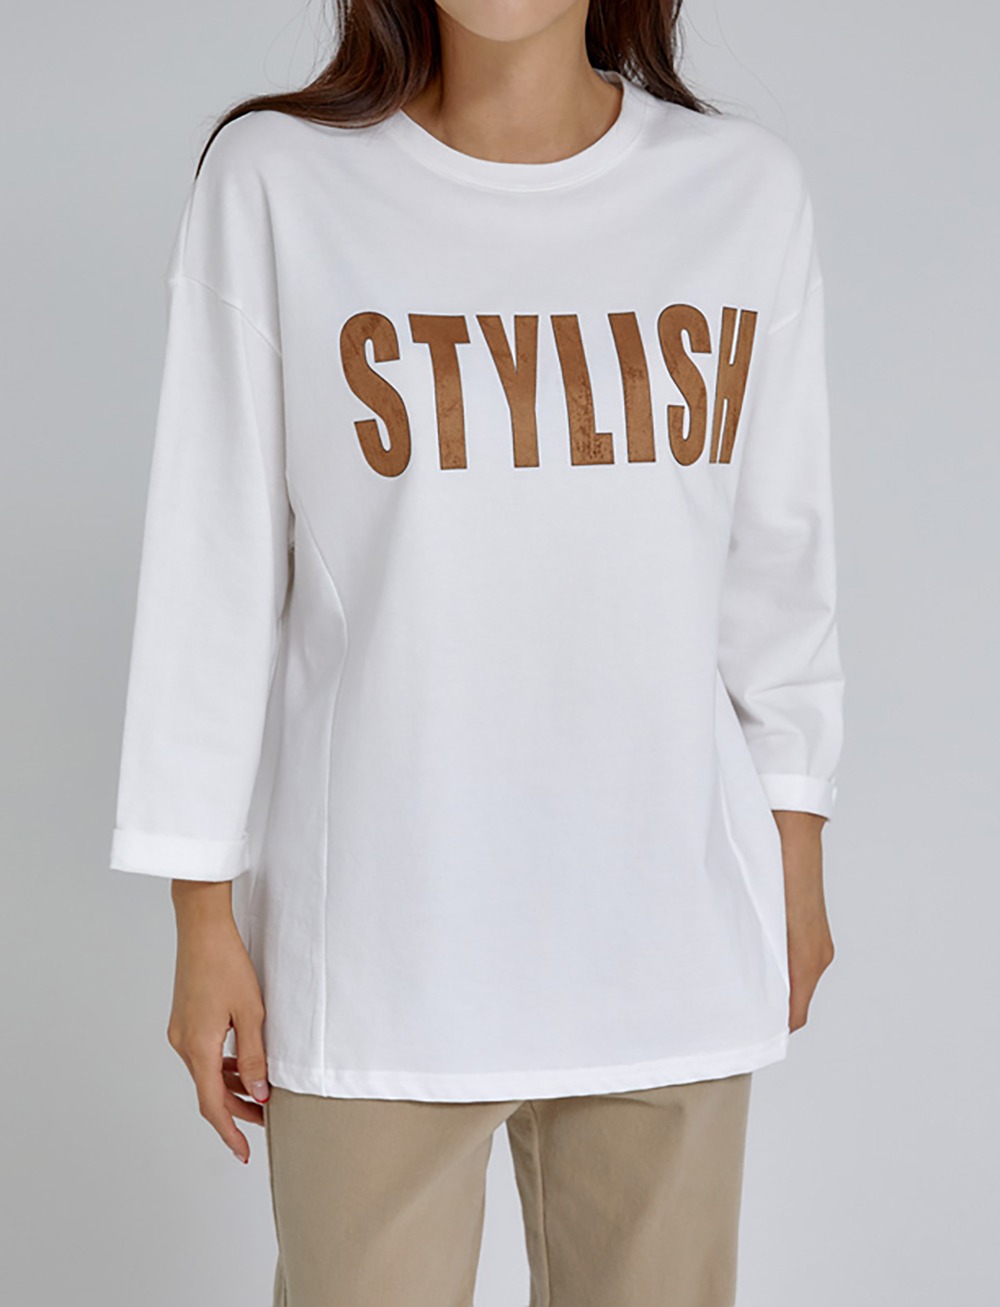 Stylish Lettering T-shirt